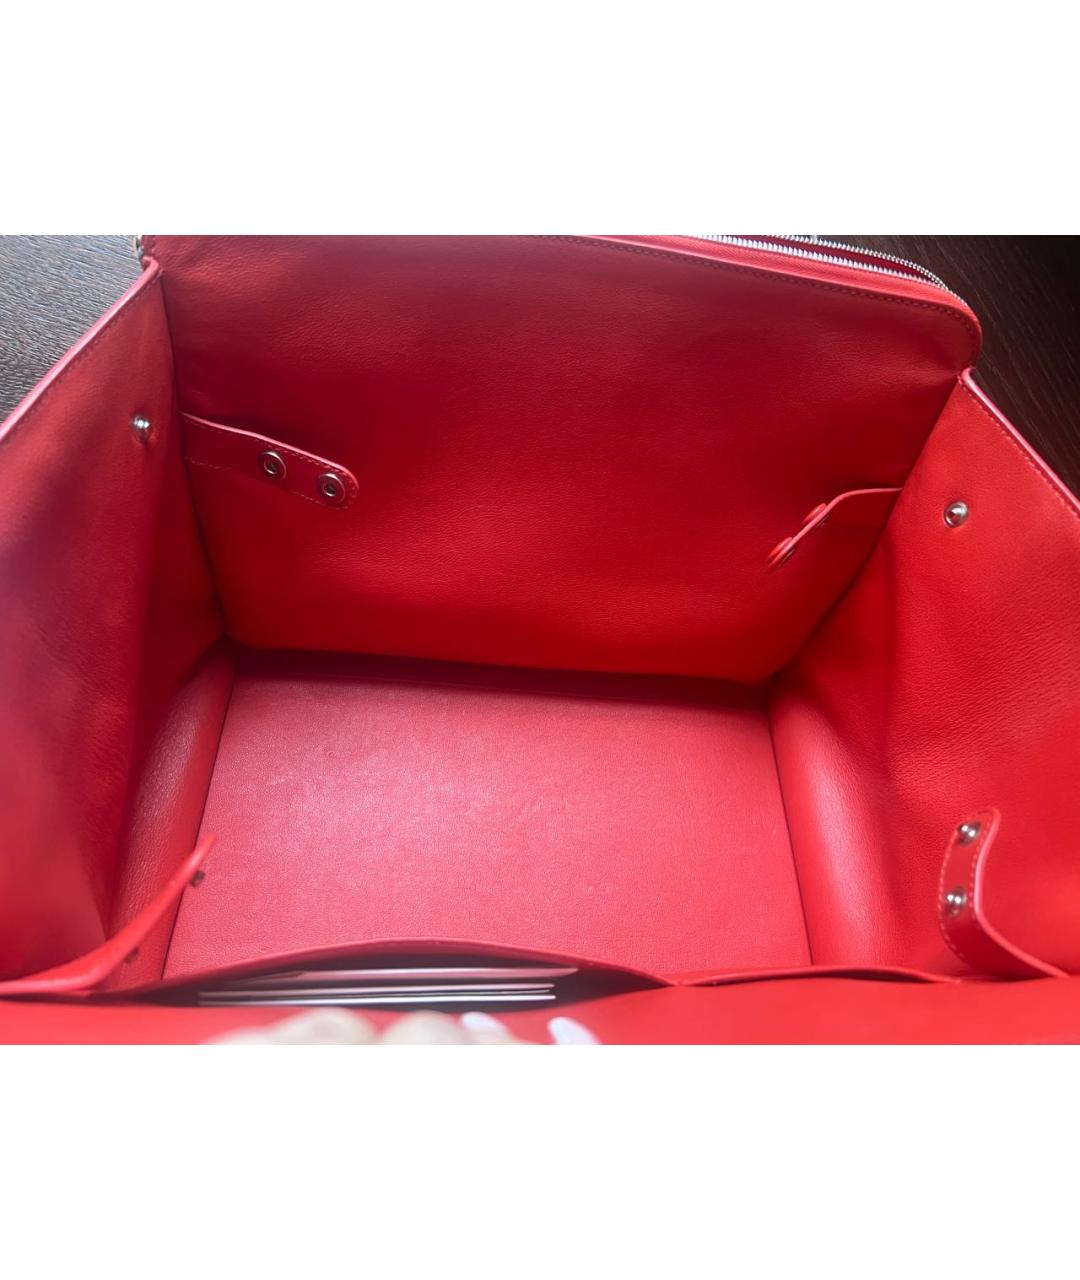 CELINE PRE-OWNED Красная кожаная сумка с короткими ручками, фото 4